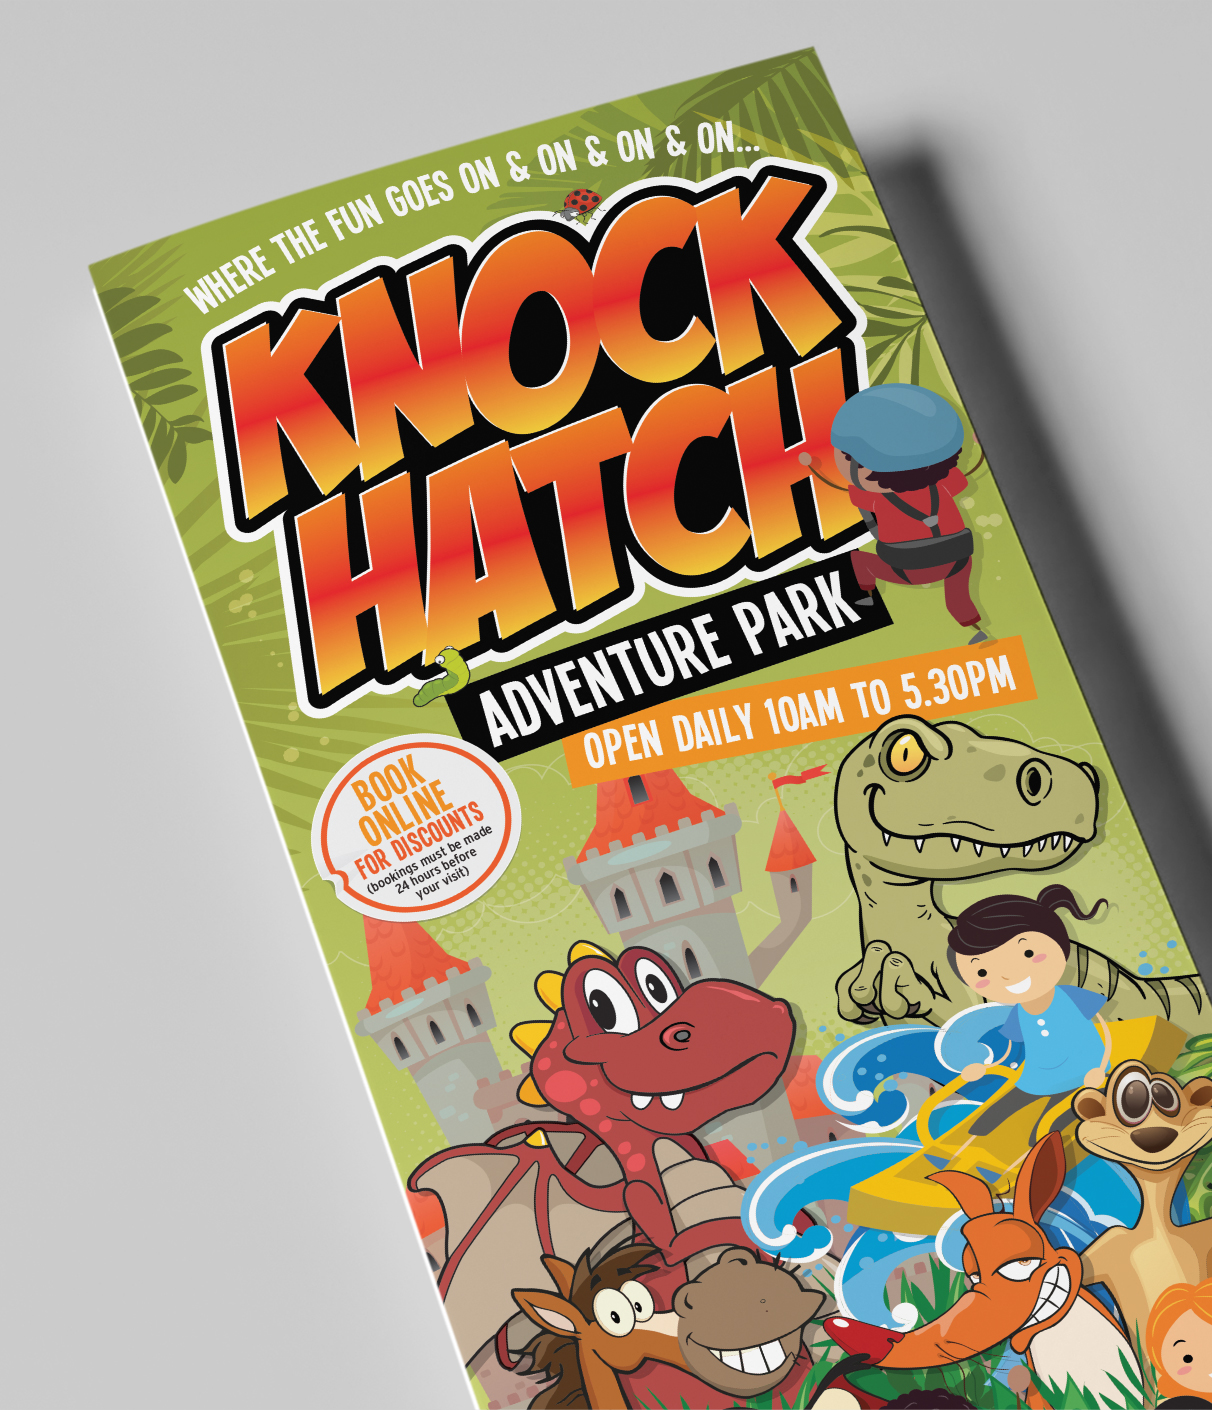 Knockhatch leaflet